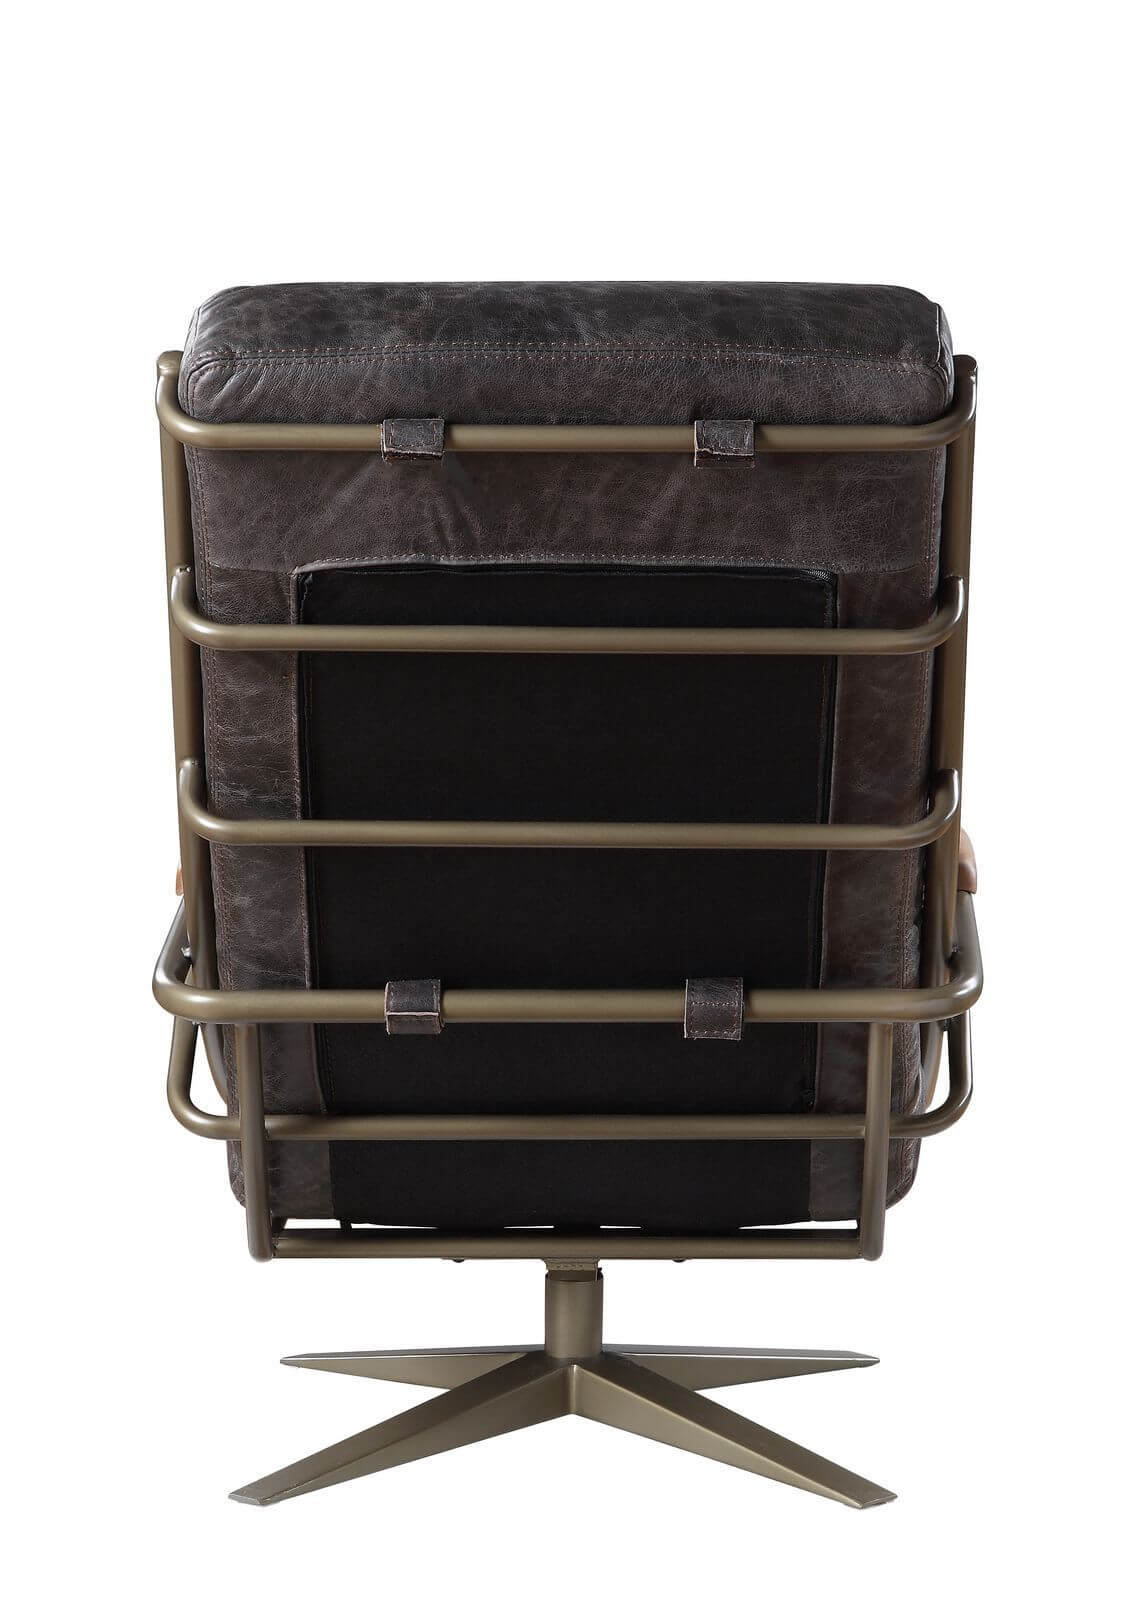 Ekin Channel Tufted Swivel Lounge Chair, Top Grain Leather in Dark Espresso - Revel Sofa 